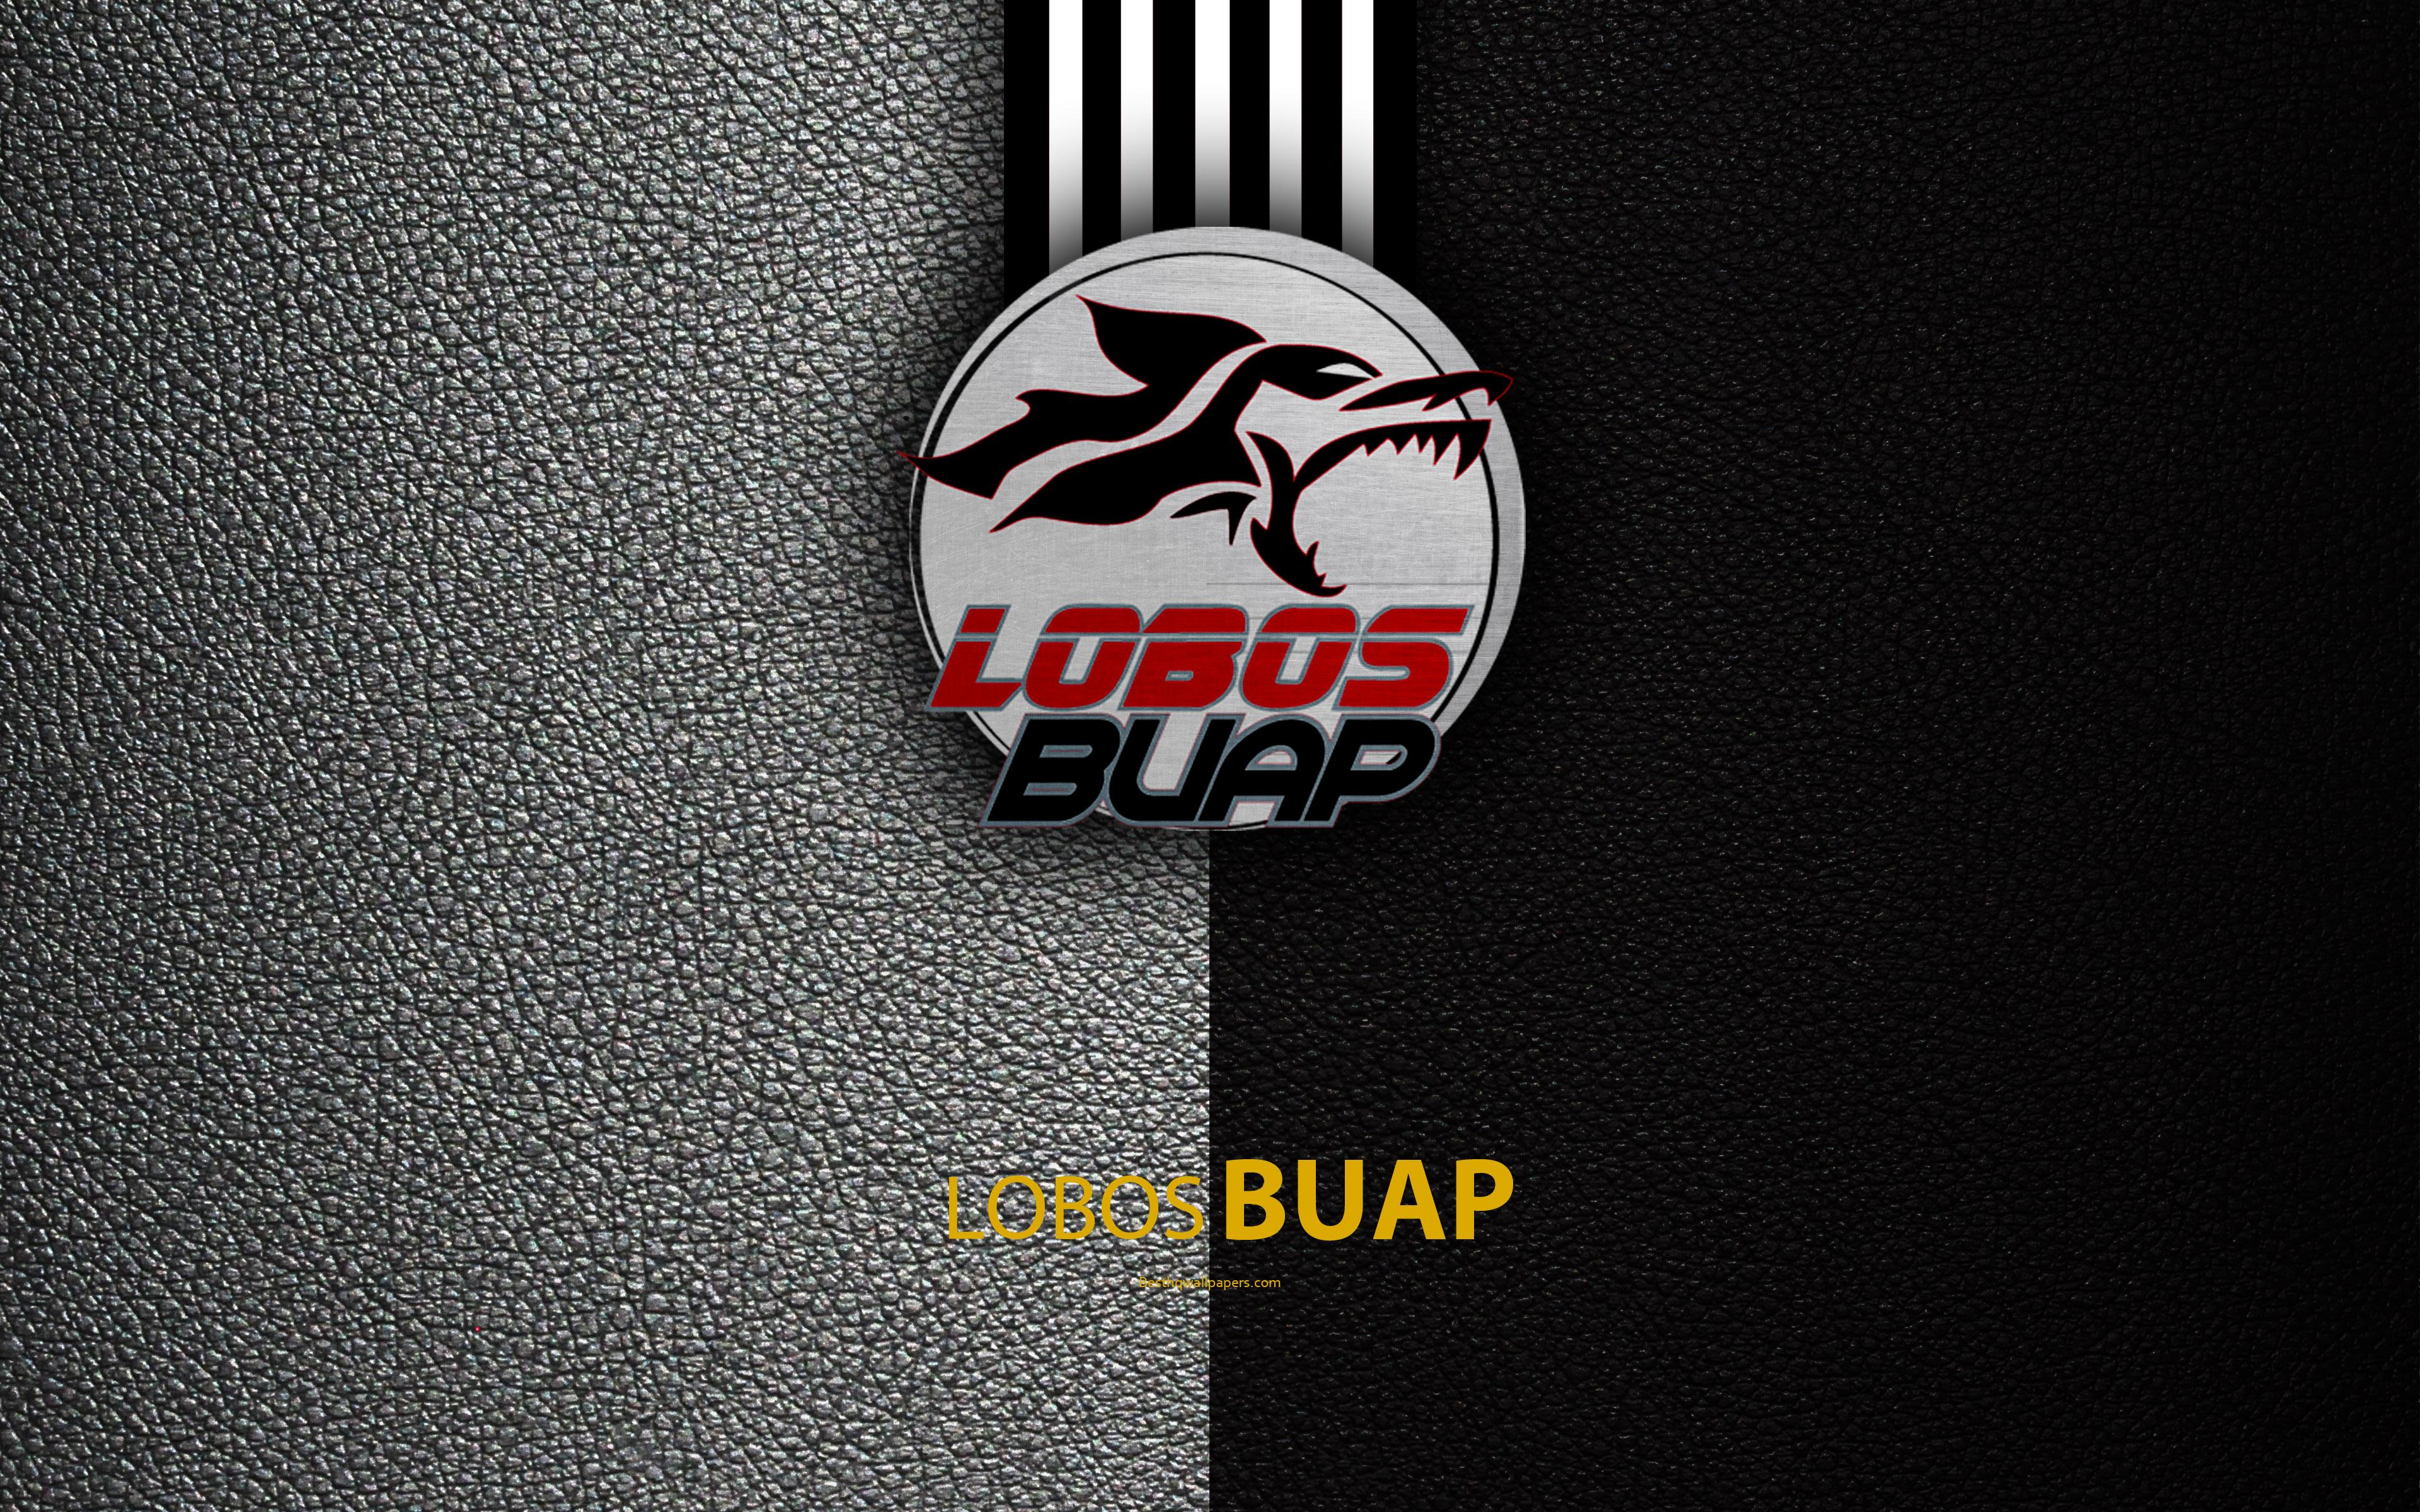 Download wallpaper Lobos BUAP, 4k, leather texture, logo, Mexican